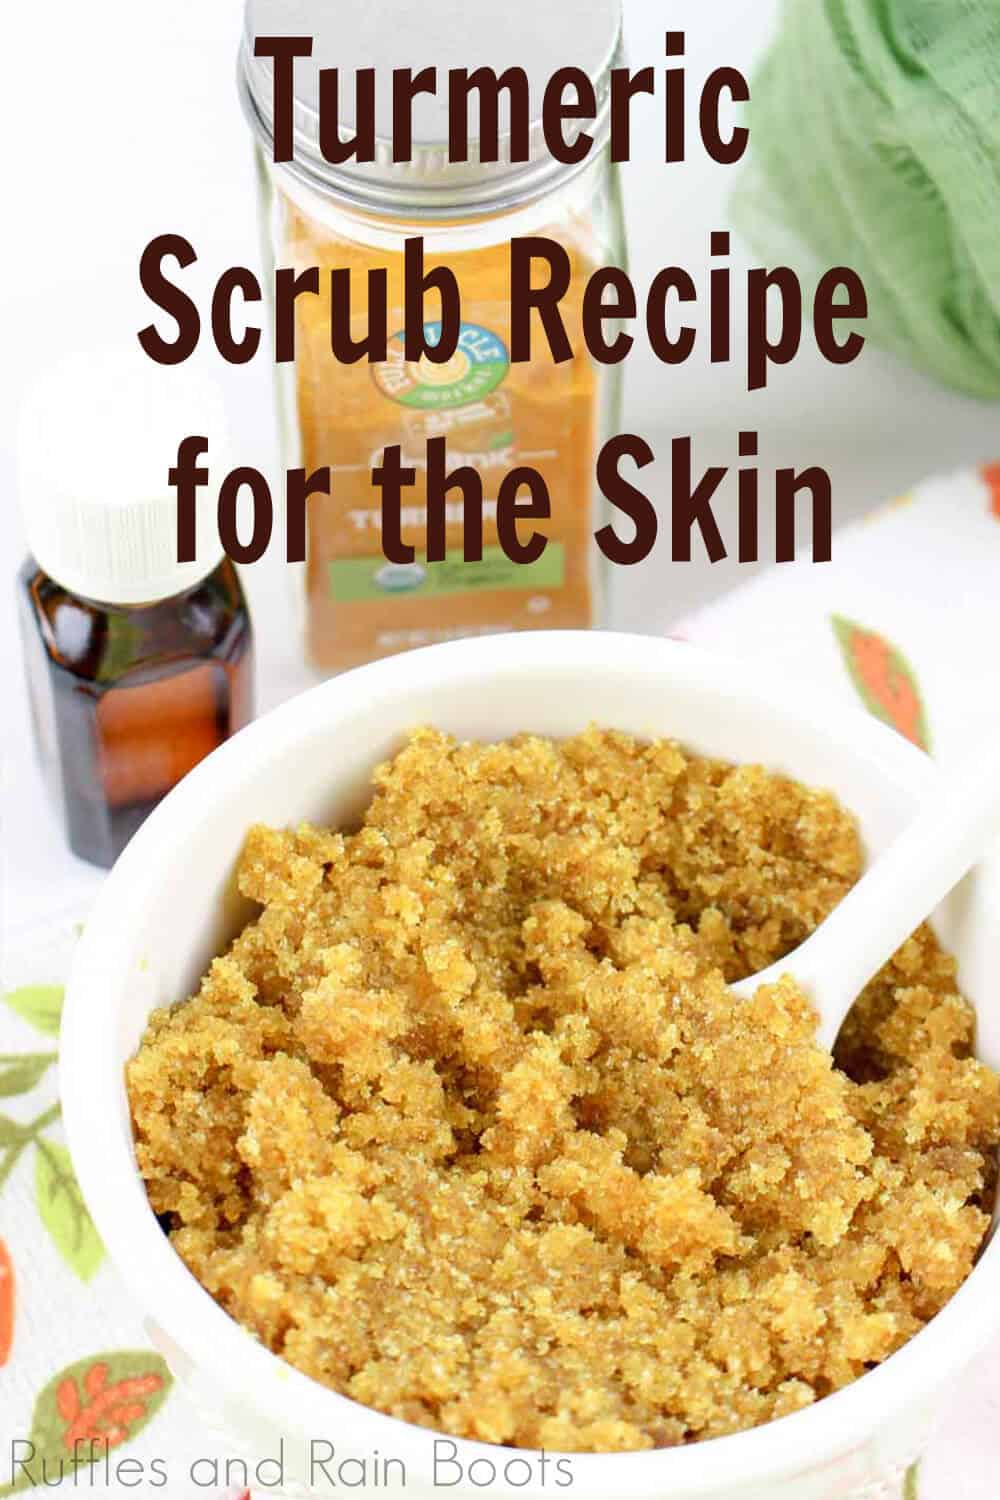 turmeric scrub recipe for skin redness with text which reads turmeric scrub recipe for the skin